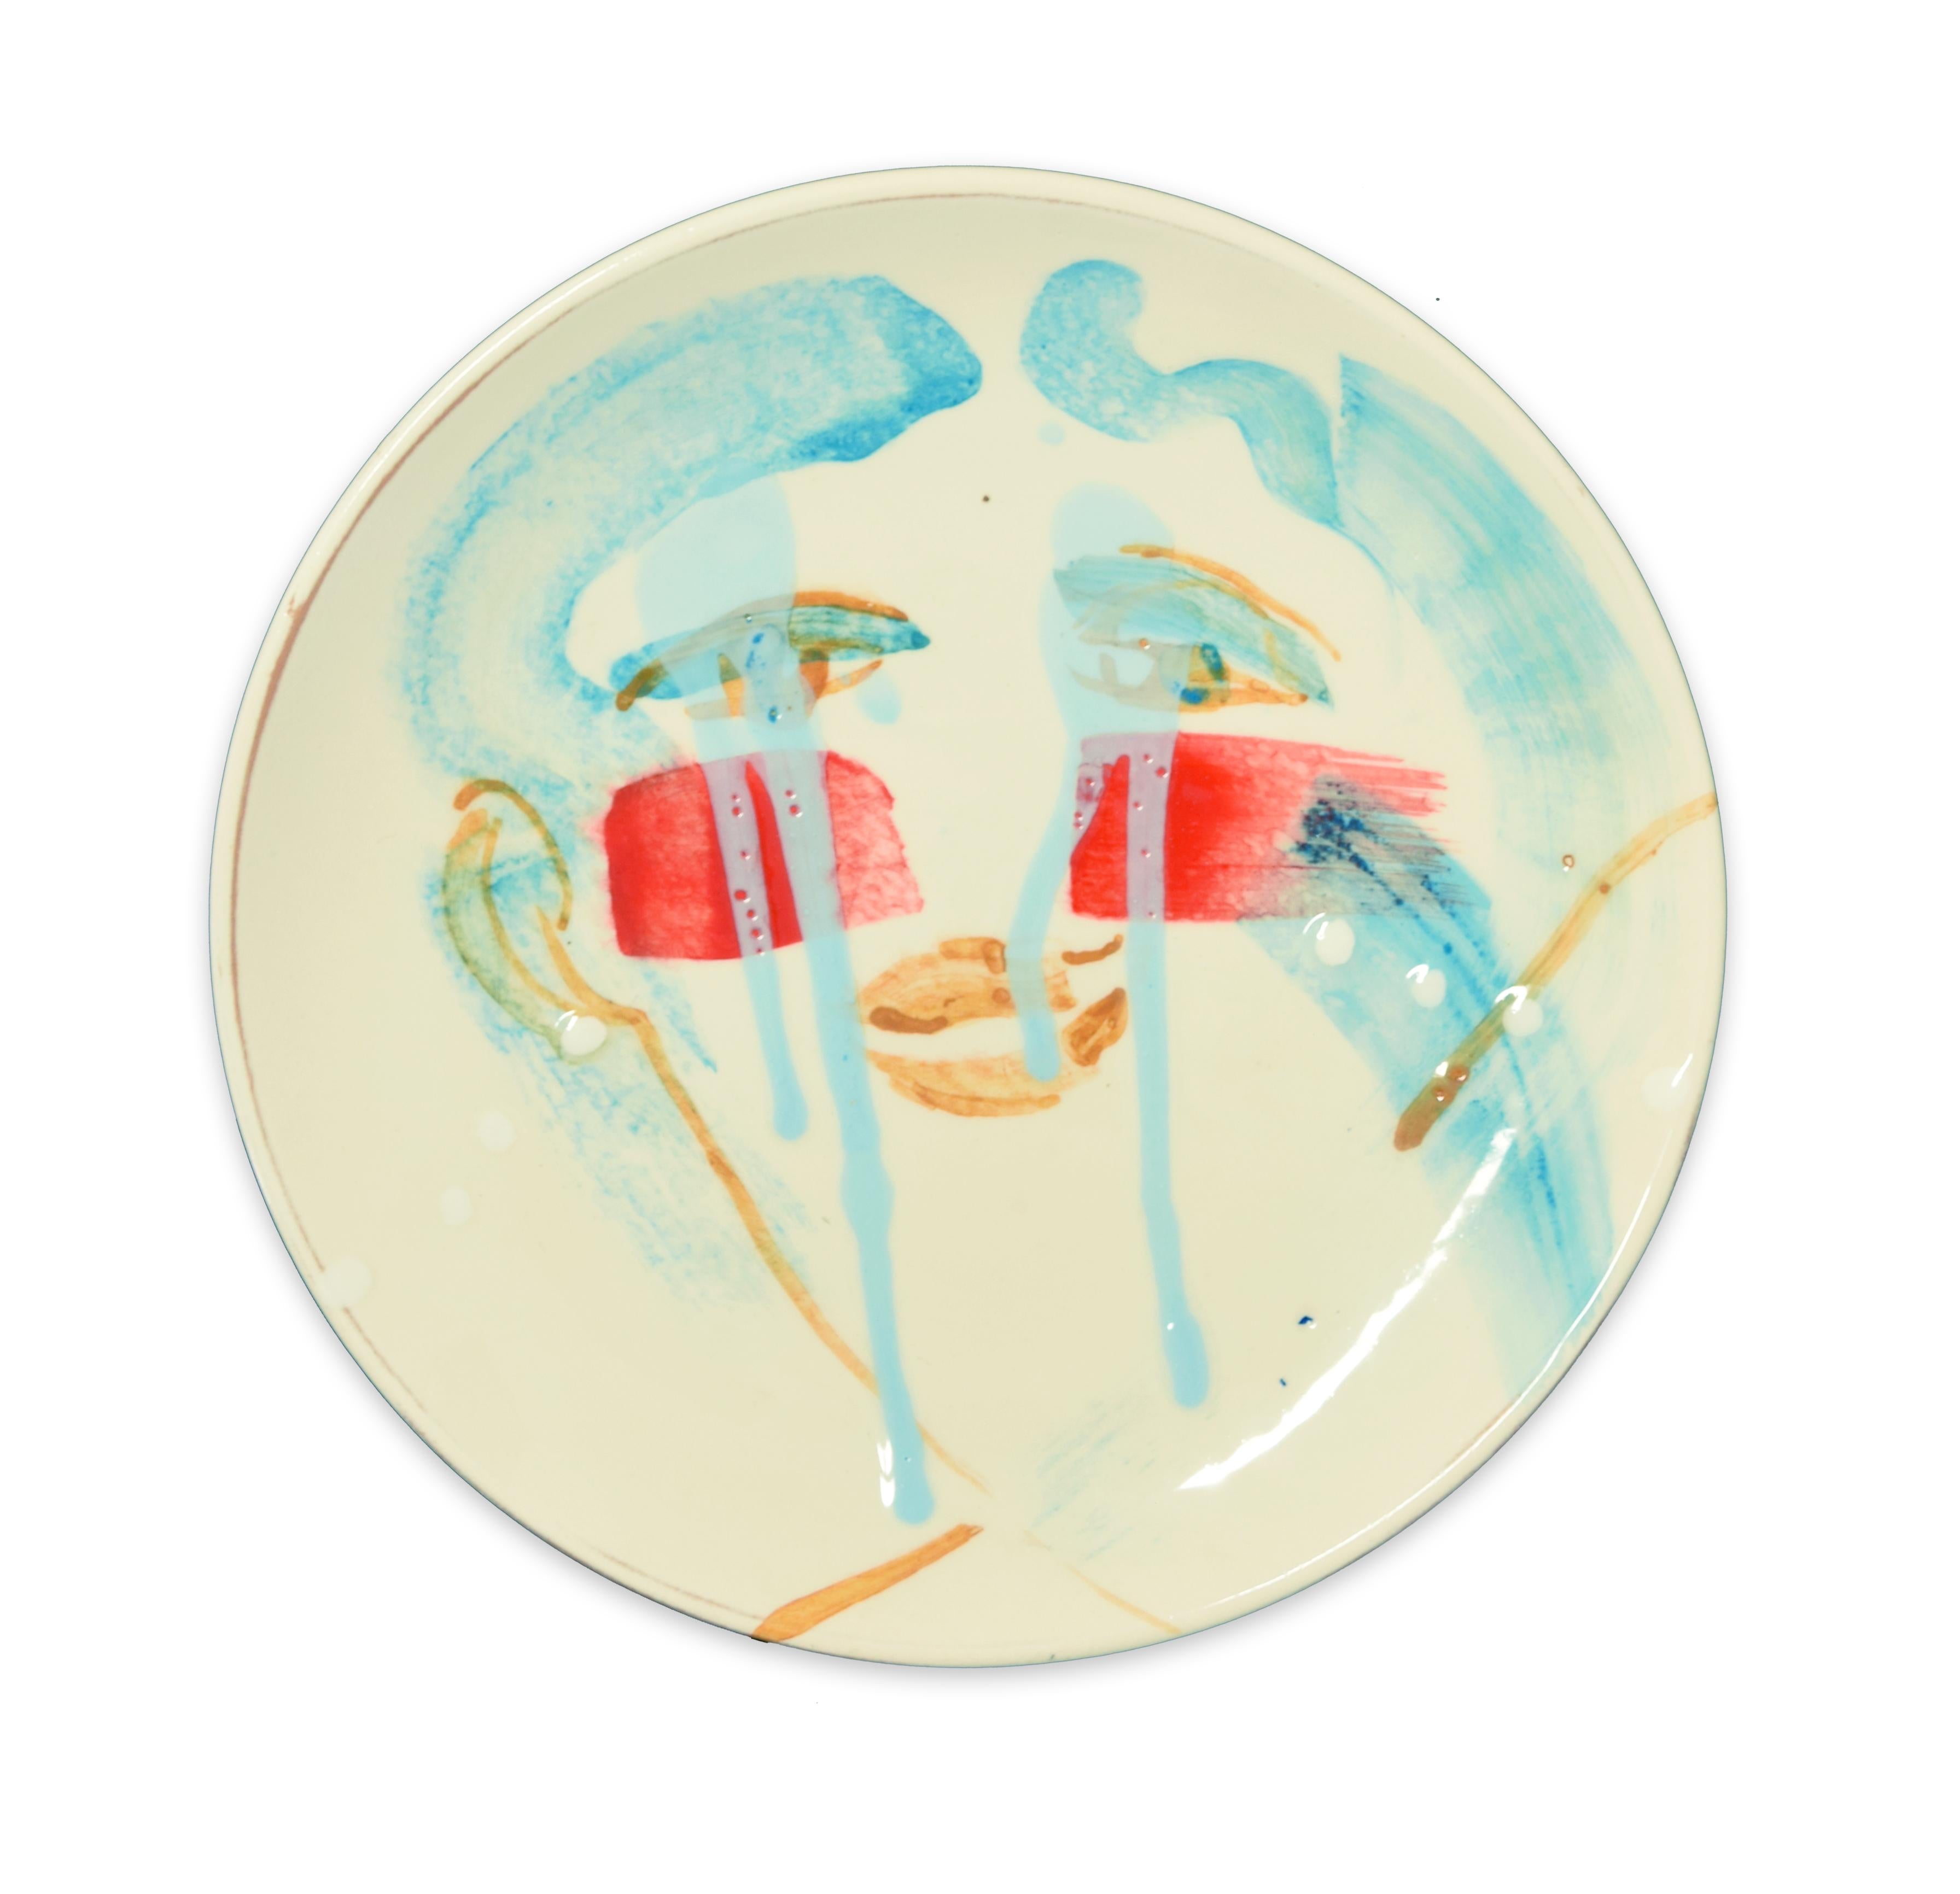 Teardrops - Hand-made Flat Ceramic Dish by A. Kurakina - 2019